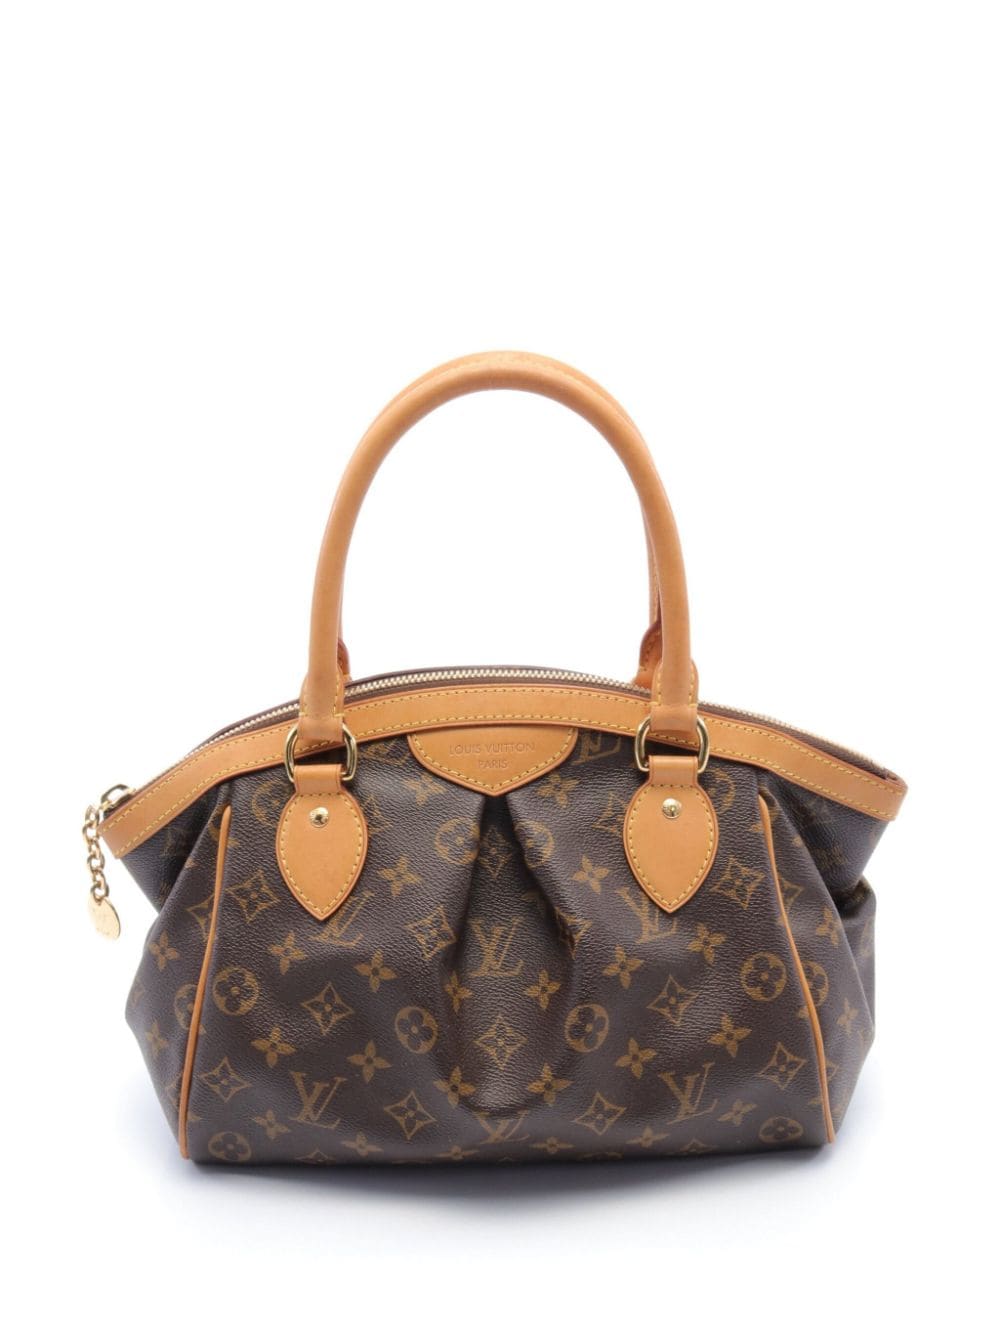 Pre-owned Louis Vuitton 2009 Tivoli Pm Handbag In Brown